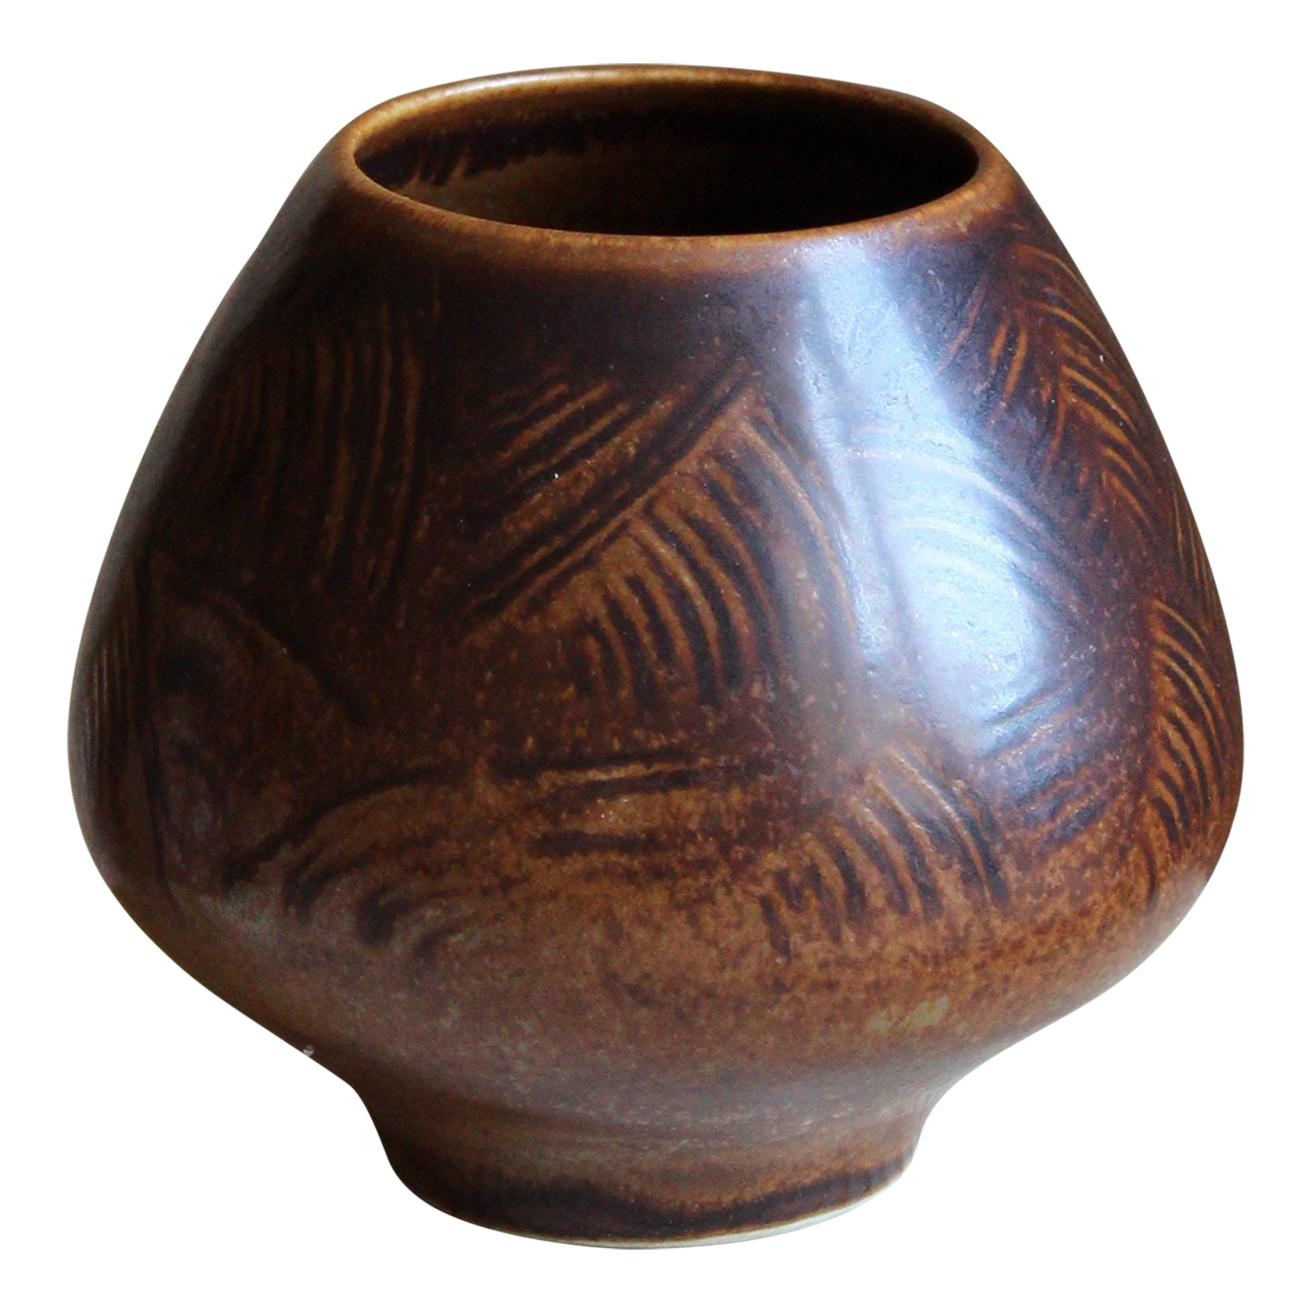 Eva Stæhr-Nielsen, Small Vase, Glazed Stoneware, Saxbo, Denmark, 1950s